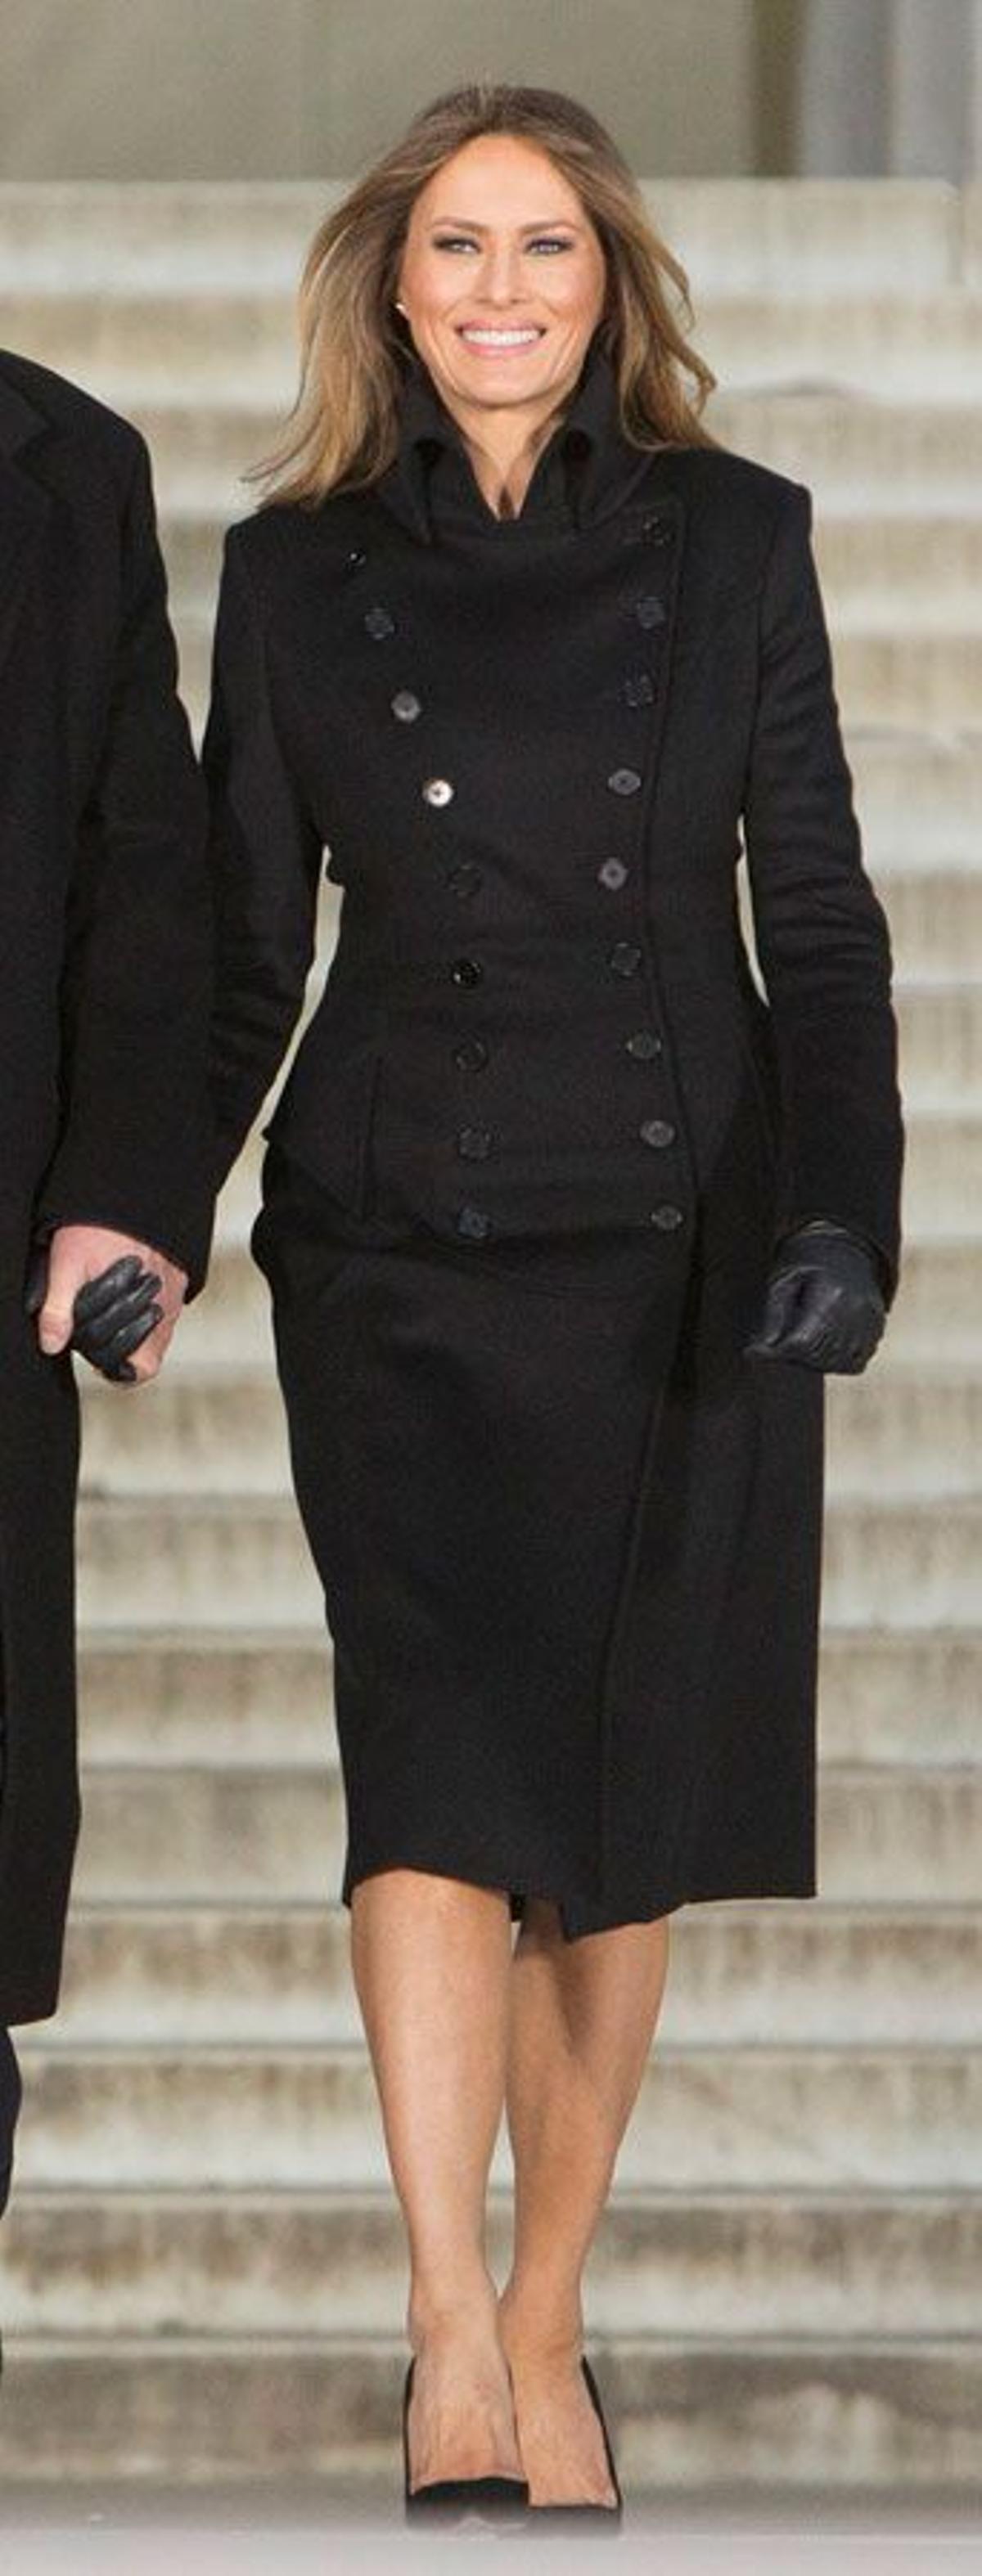 Melania Trump con abrigo negro de botones